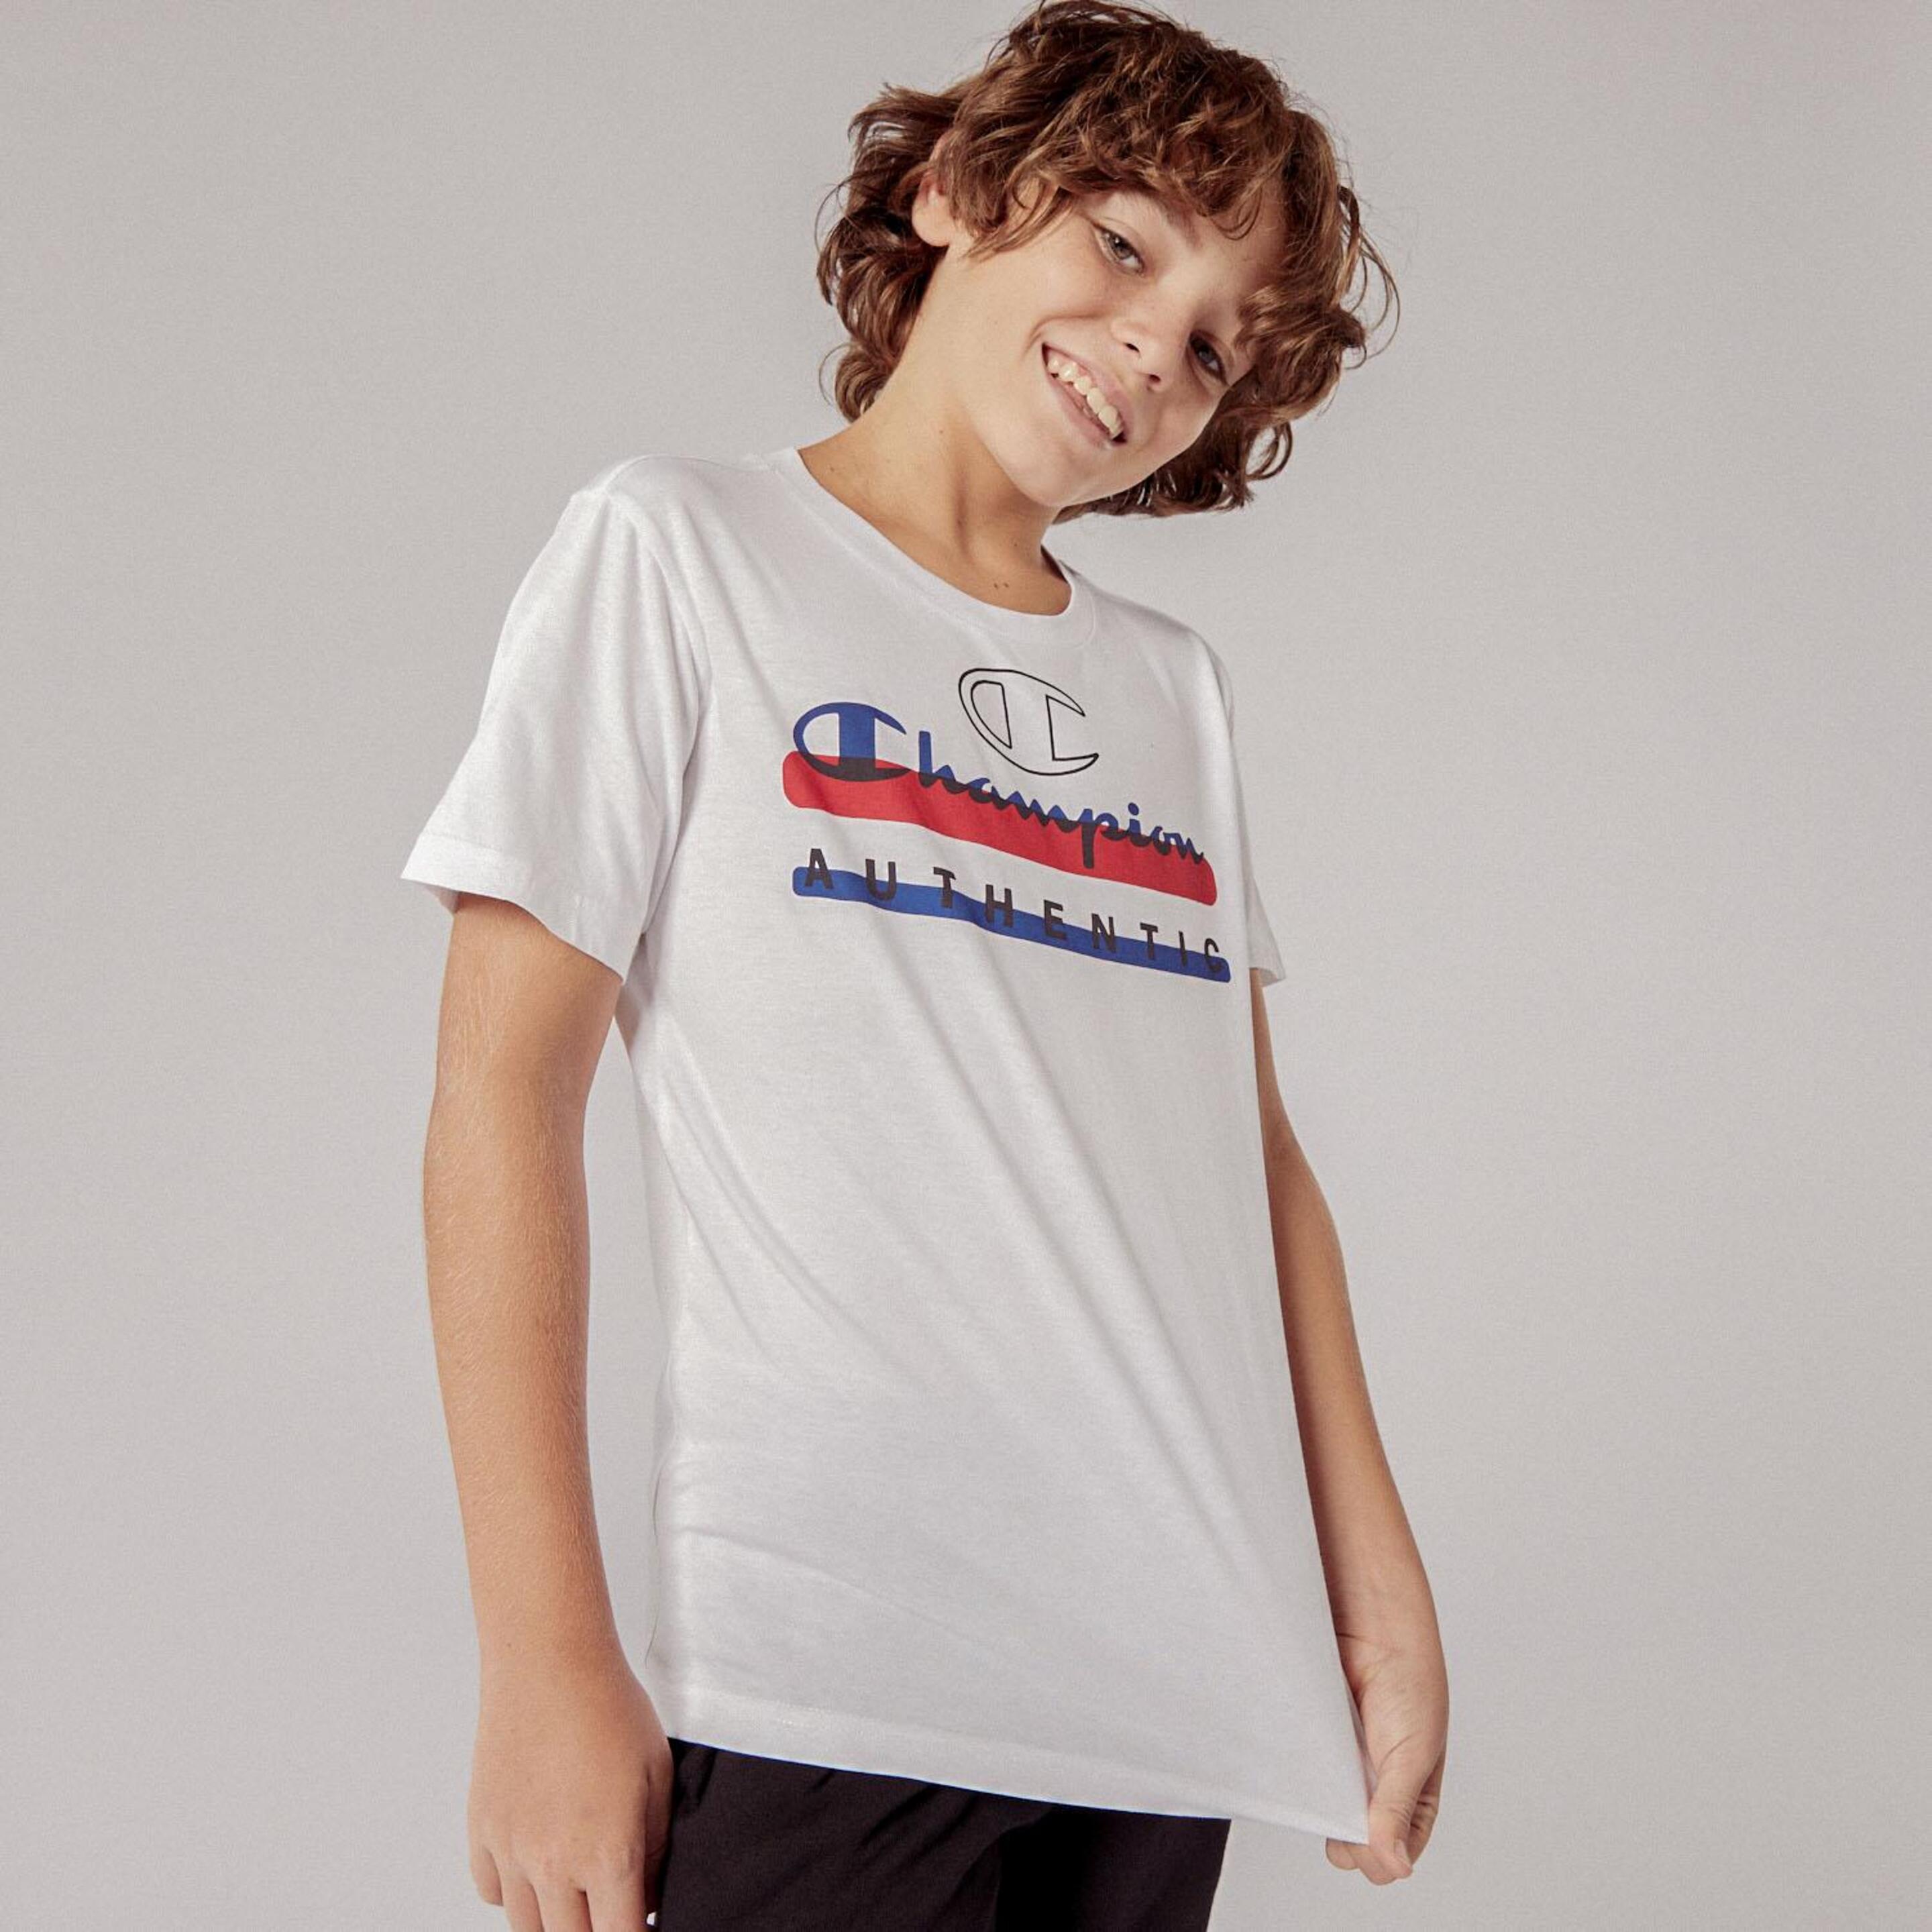 Camiseta Champion - blanco - Camiseta Niño